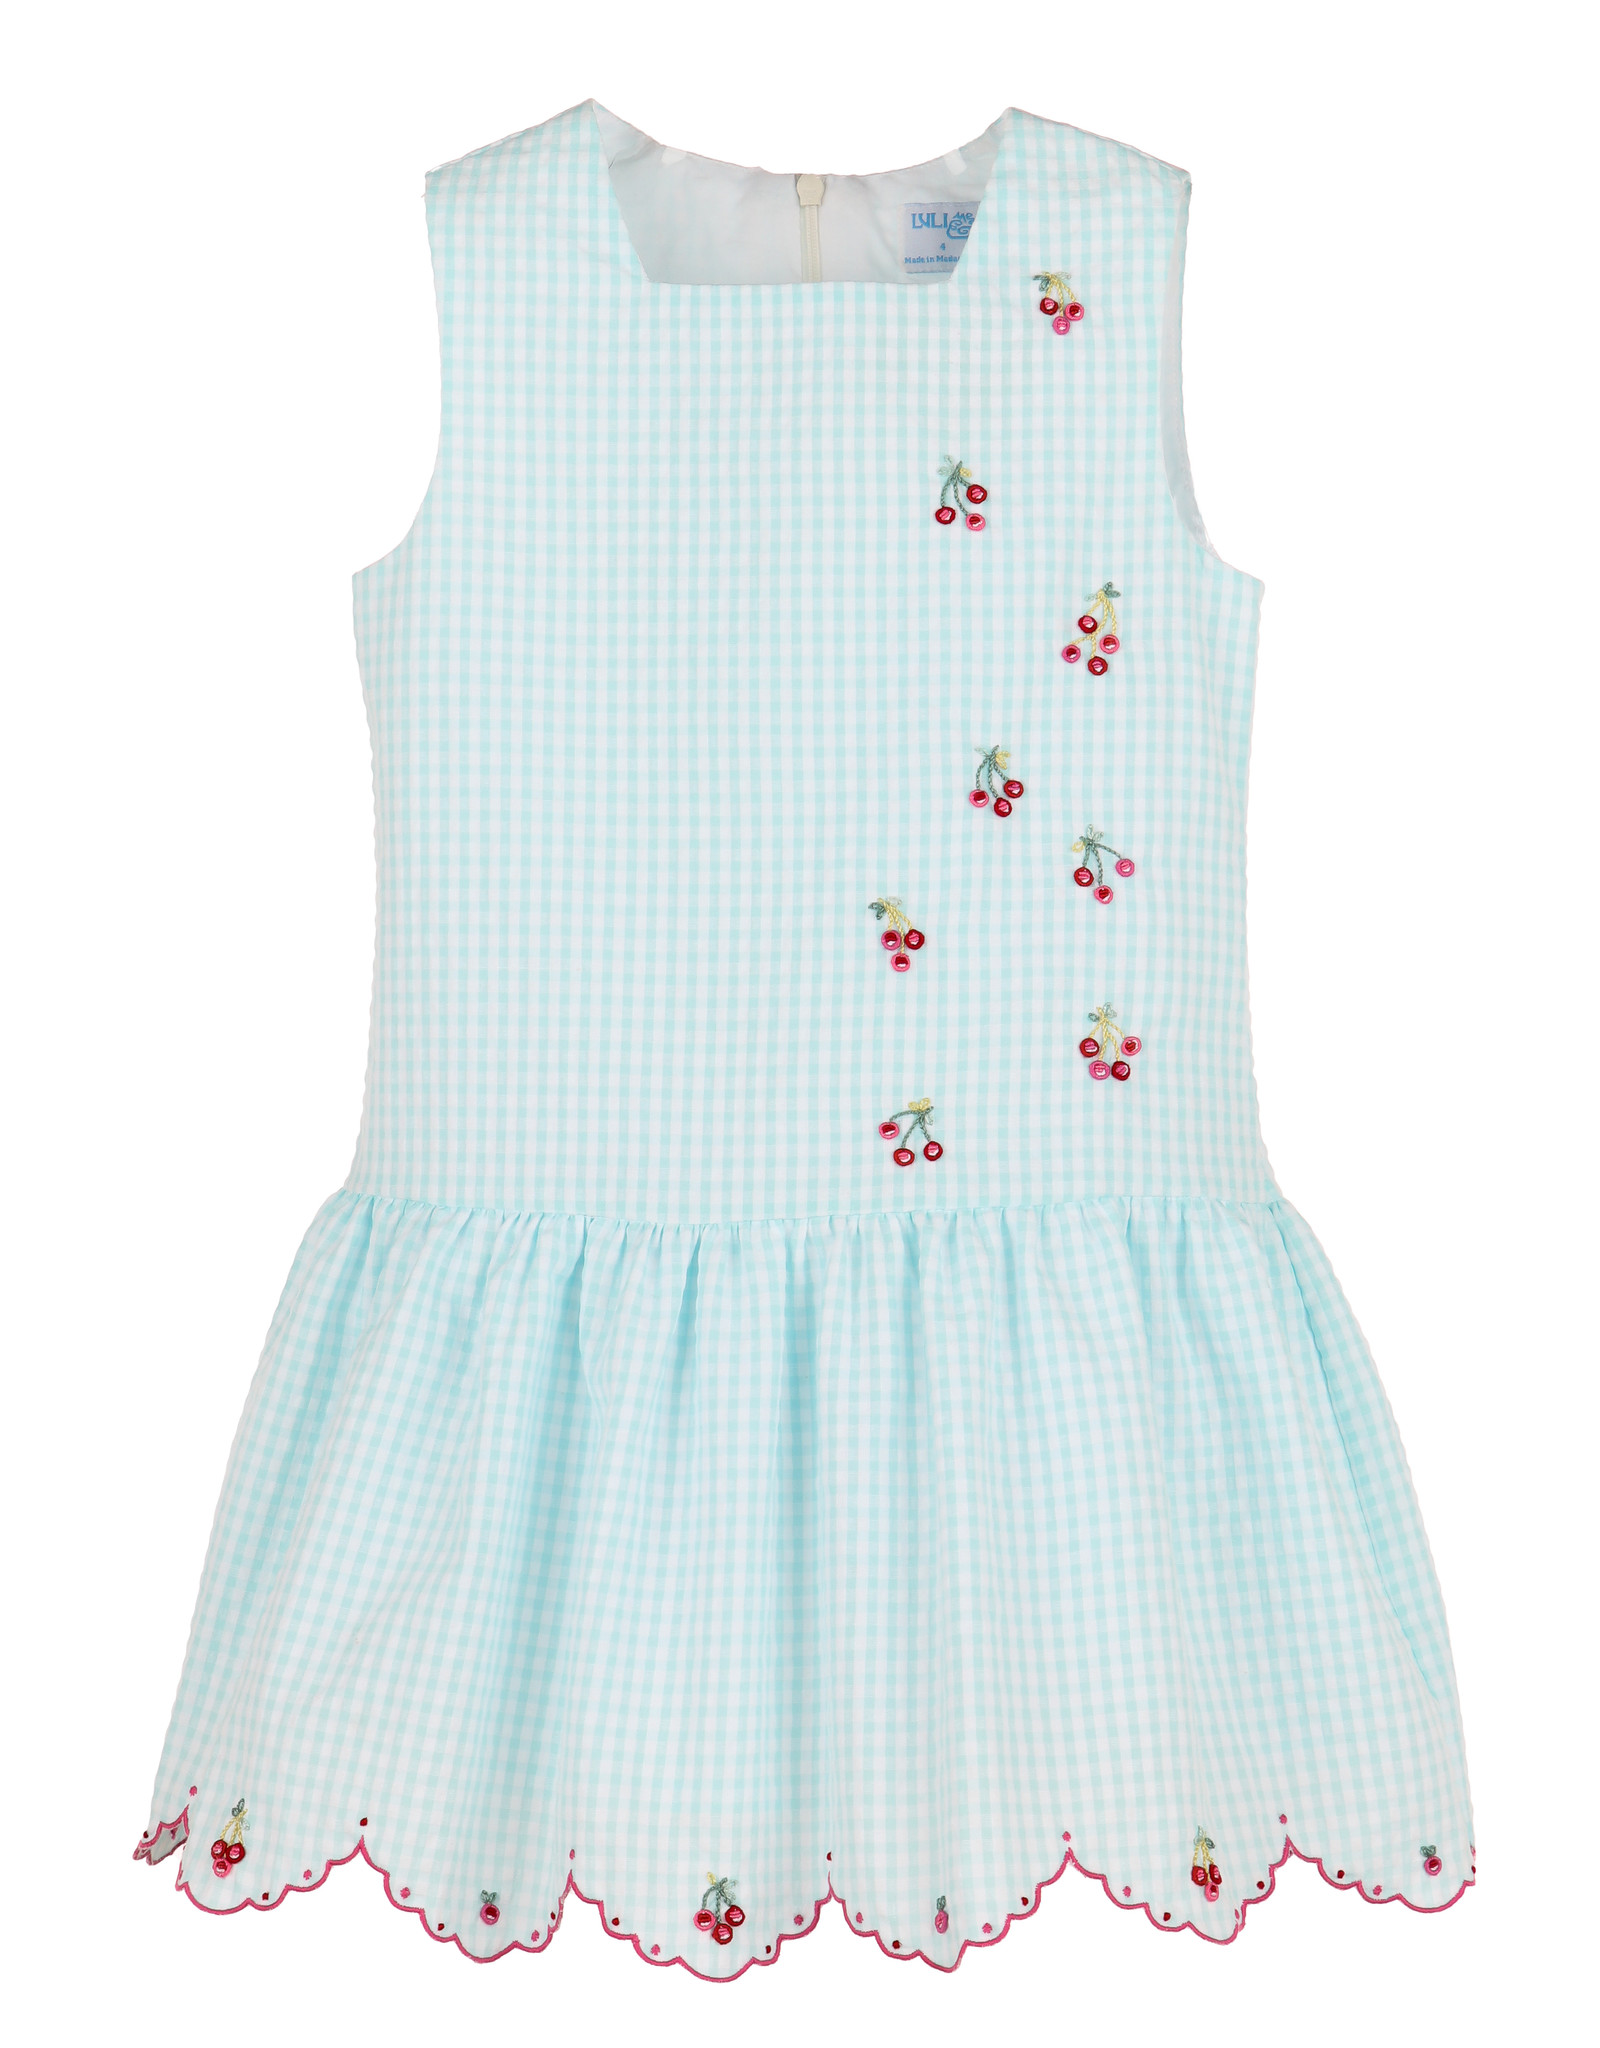 Embroidery Cherries Dress - Girls